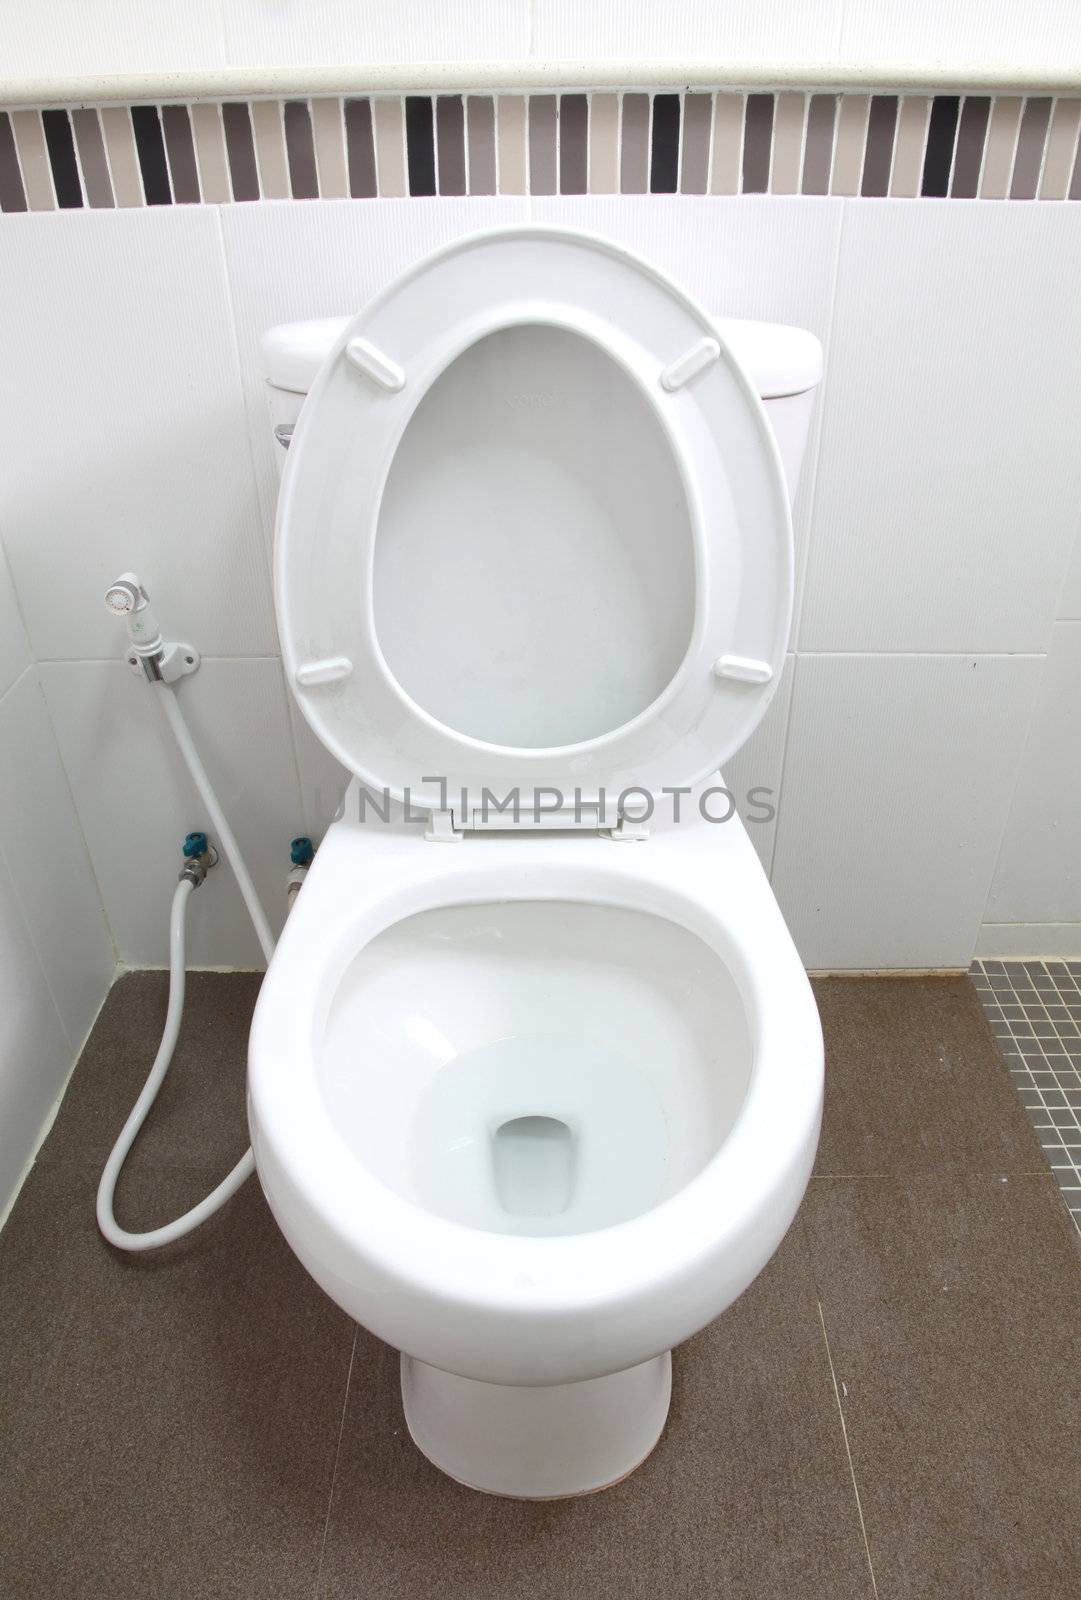 Interior of Toilet seat in bathroom